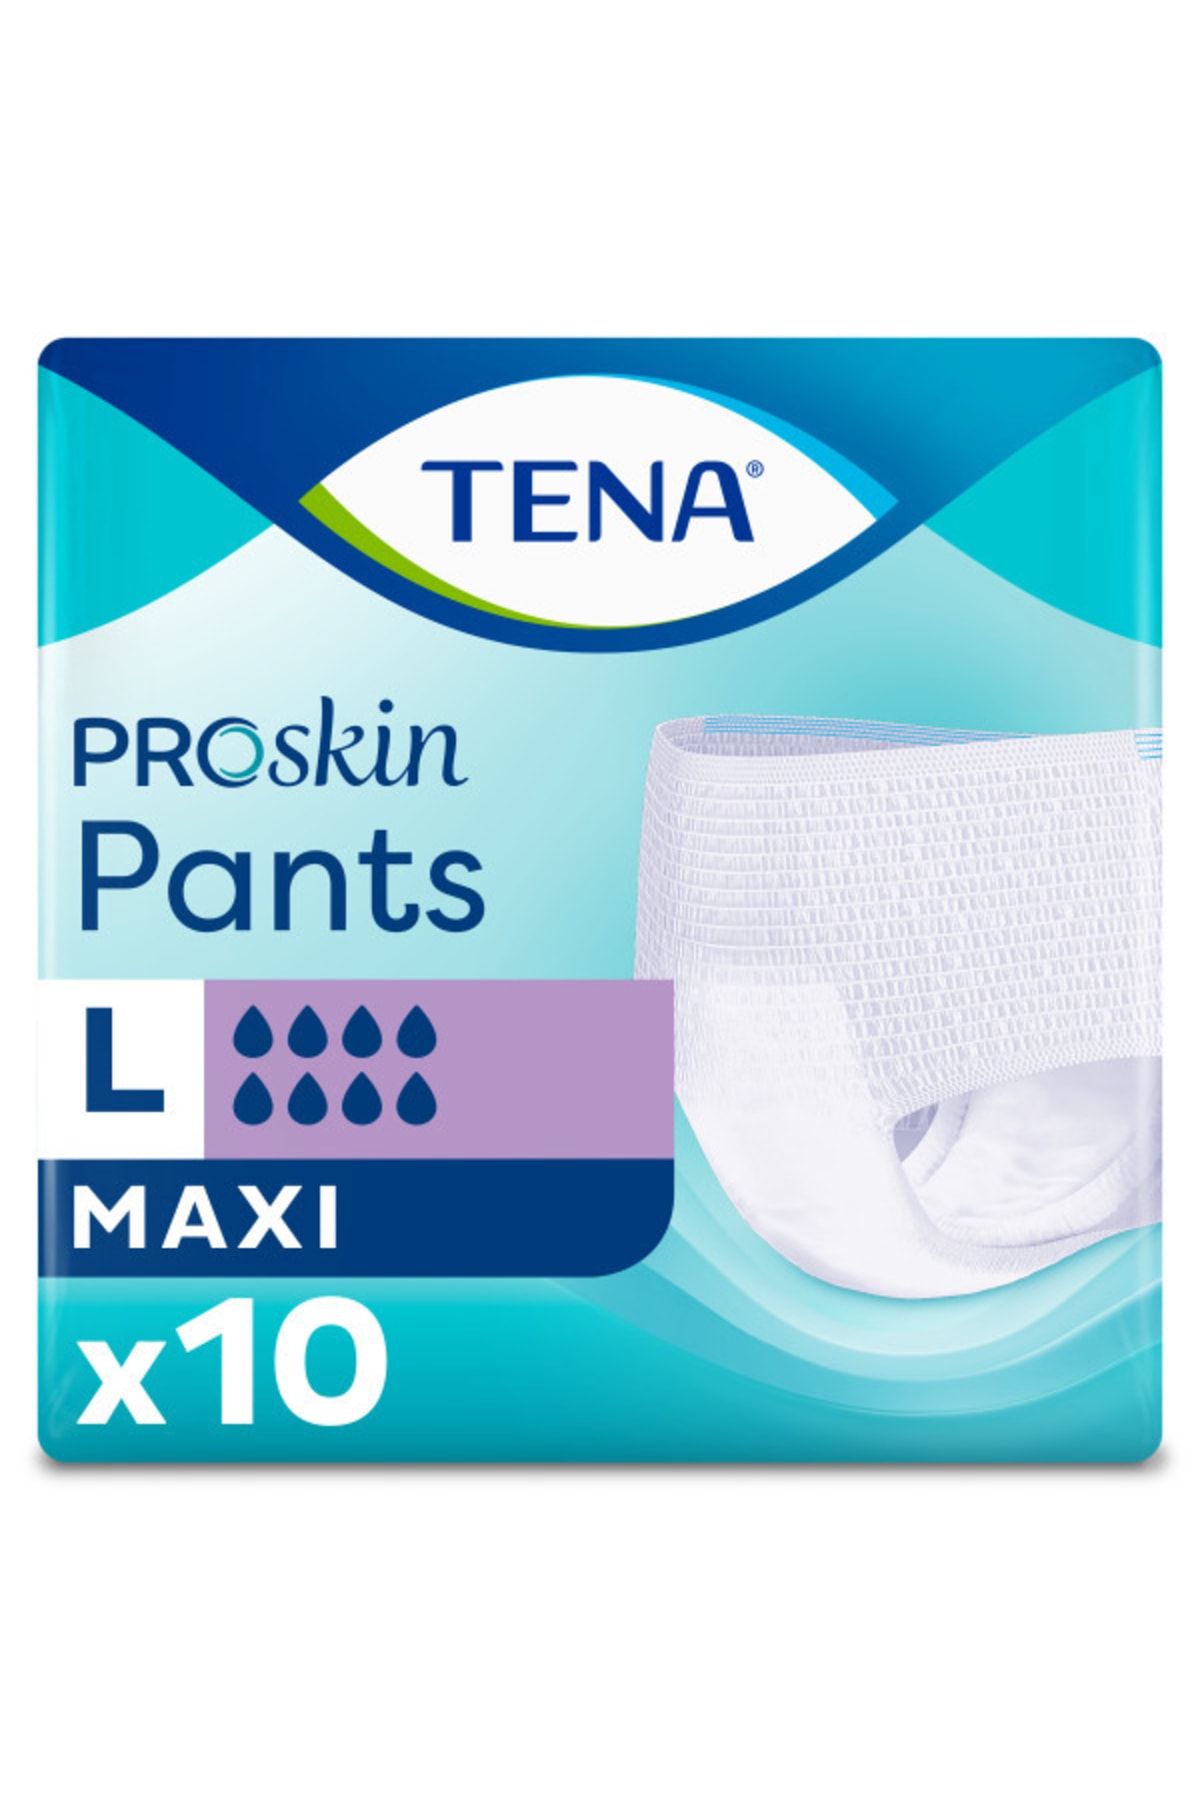 TENA Proskin Pants Maxi Emici Külot Büyük Boy l 8 Damla 10'lu Paket OH10063